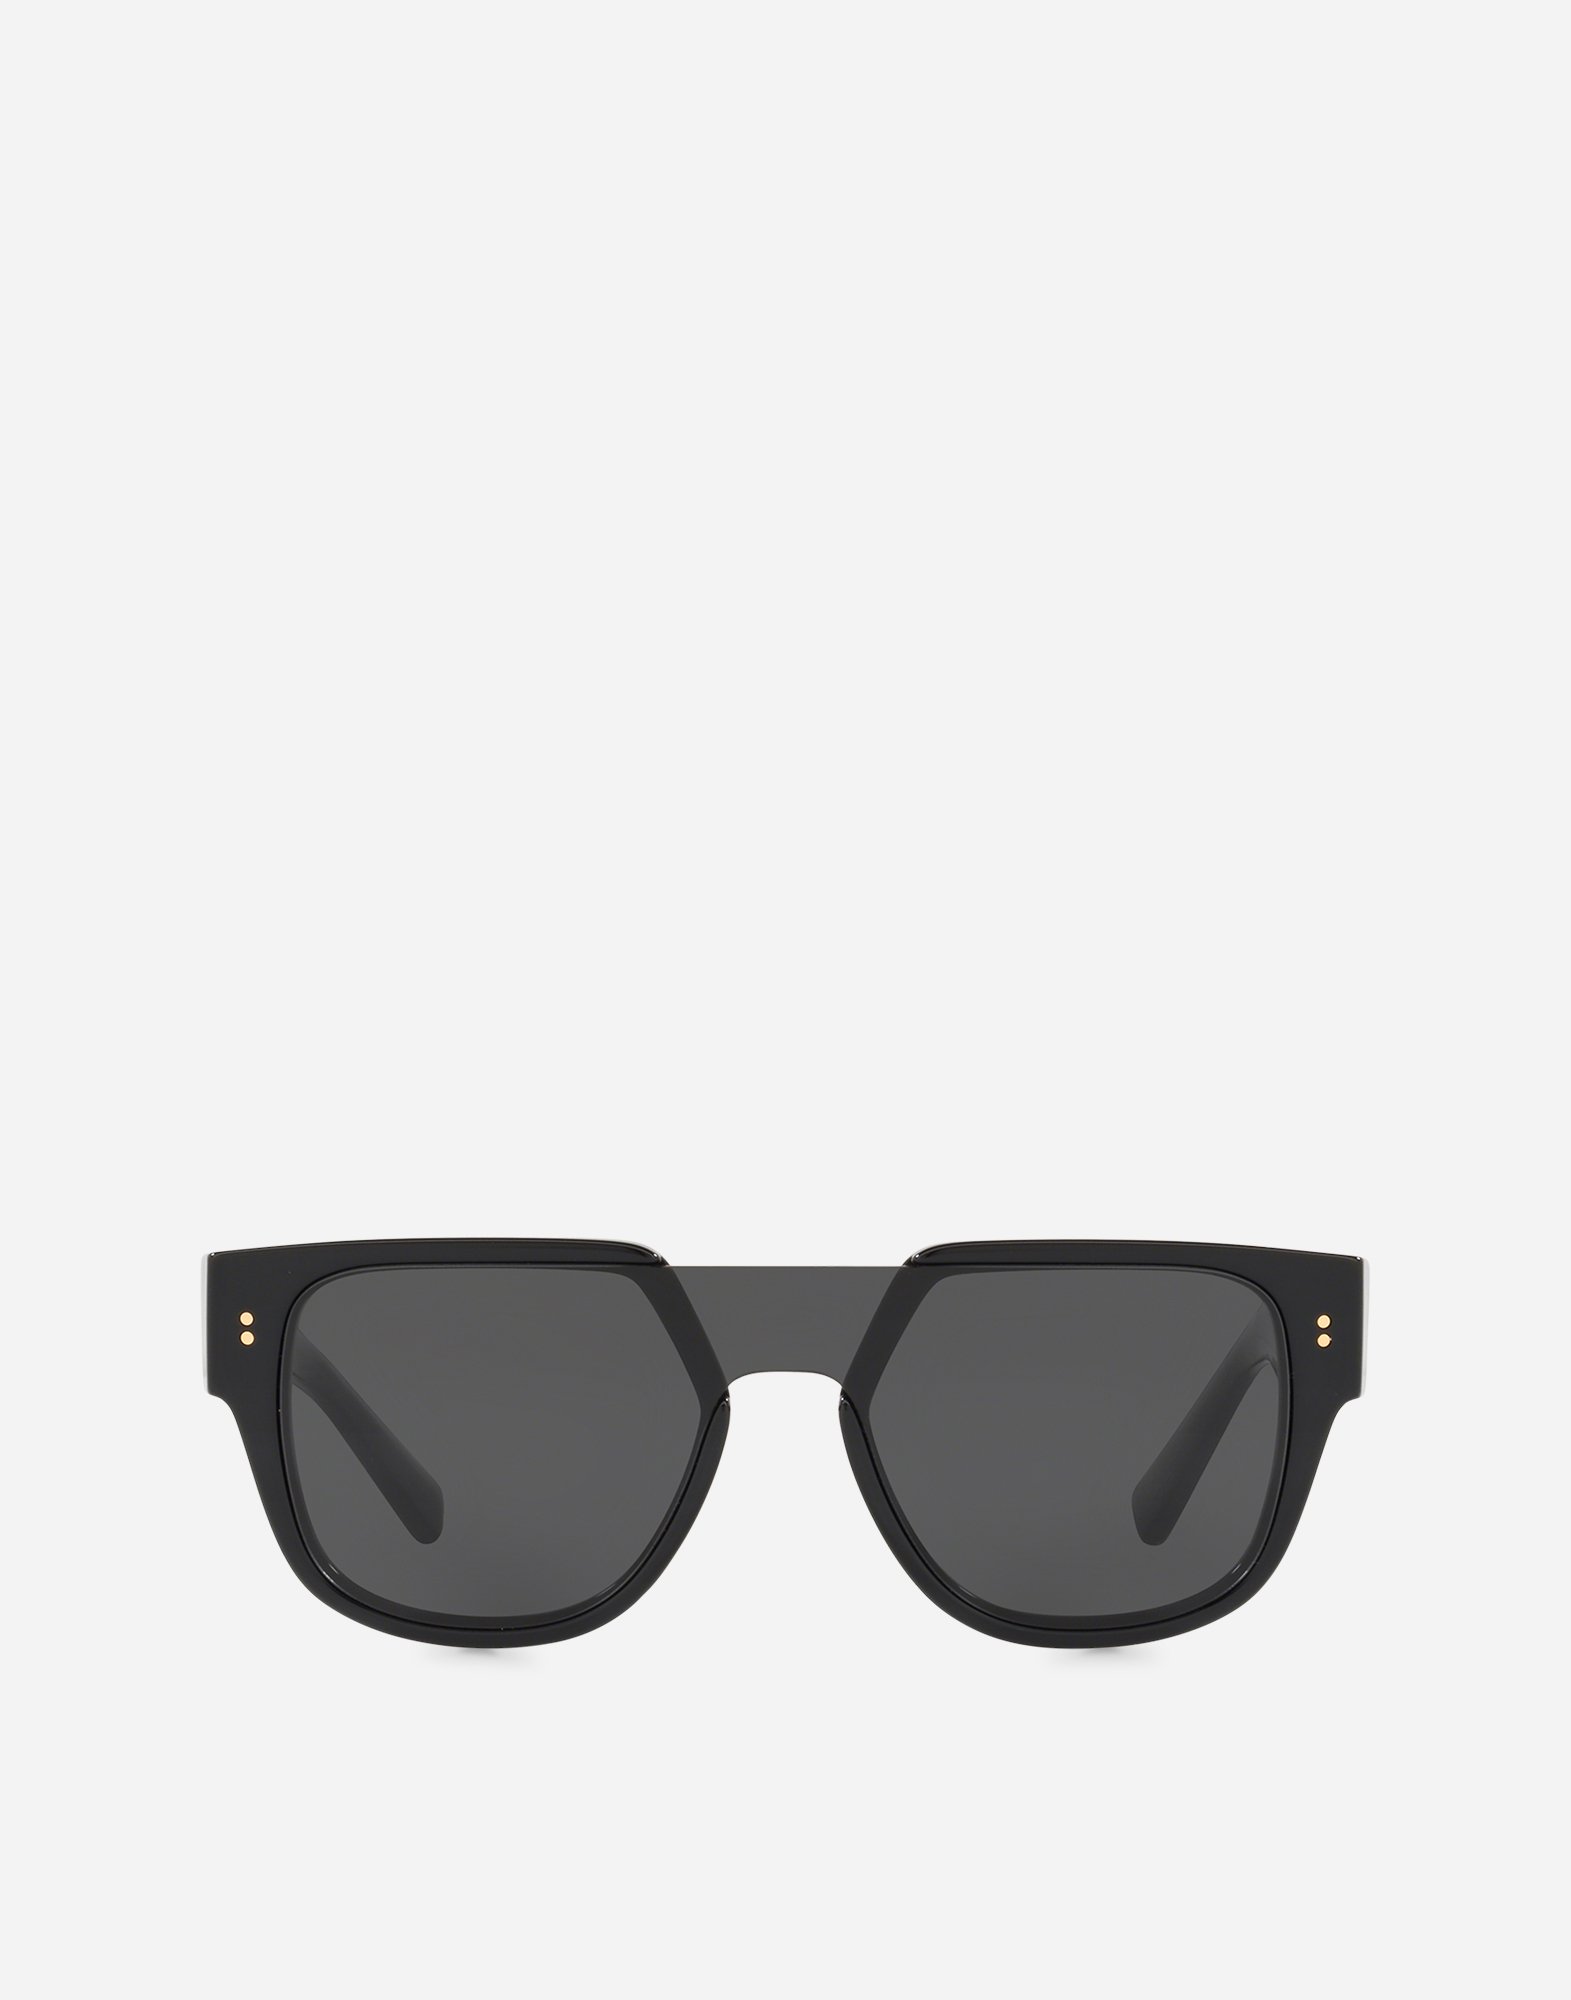 Domenico sunglasses in Black for Men | Dolce&Gabbana®